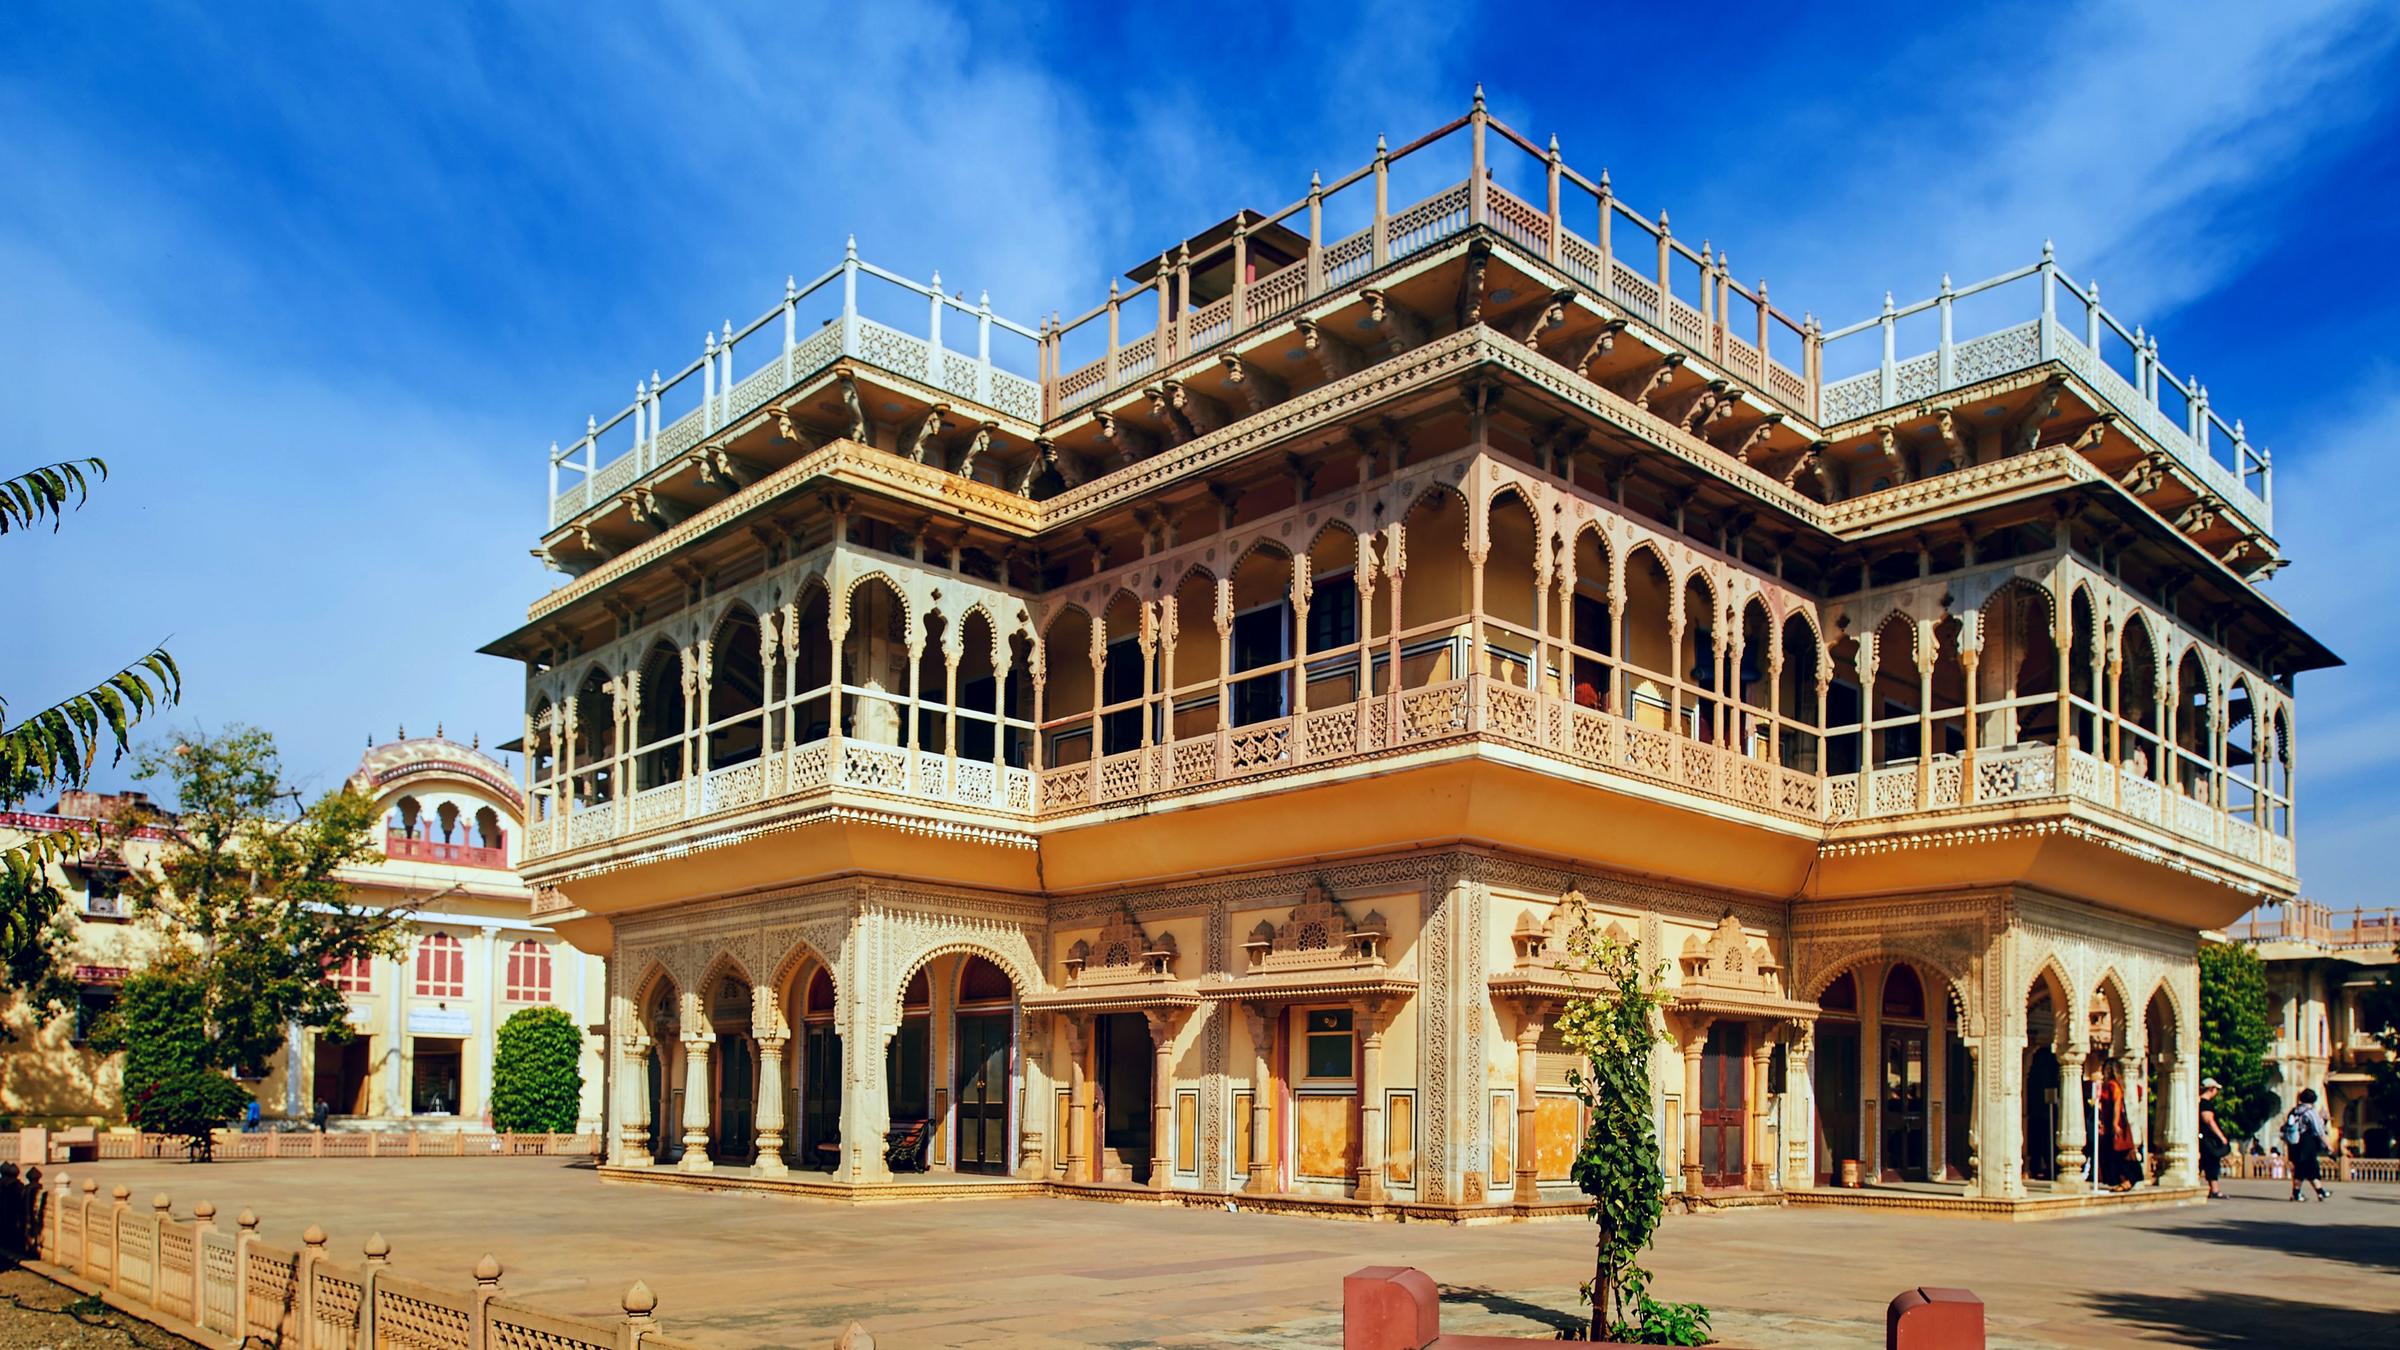 Prewedding Location in Jaipur